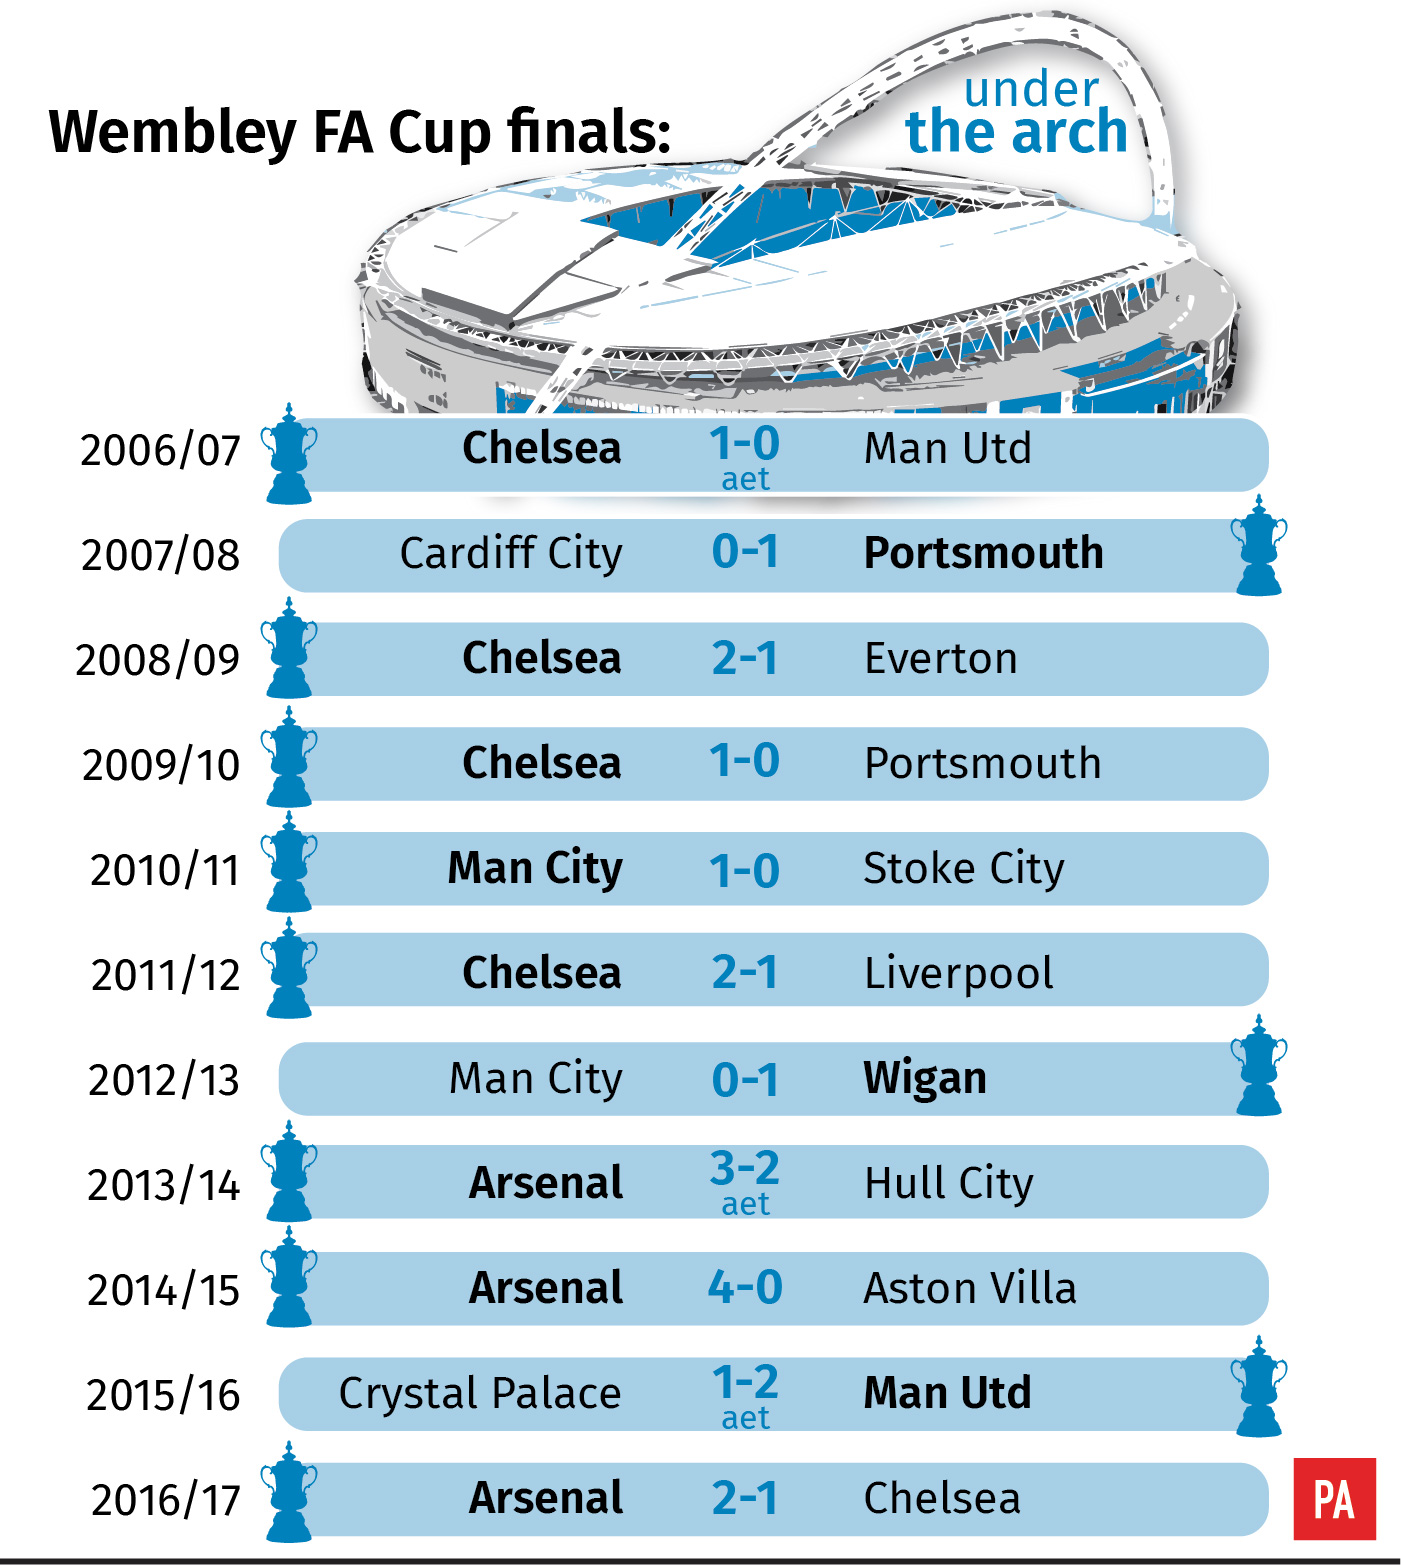 History of FA Cup finals at the new Wembley